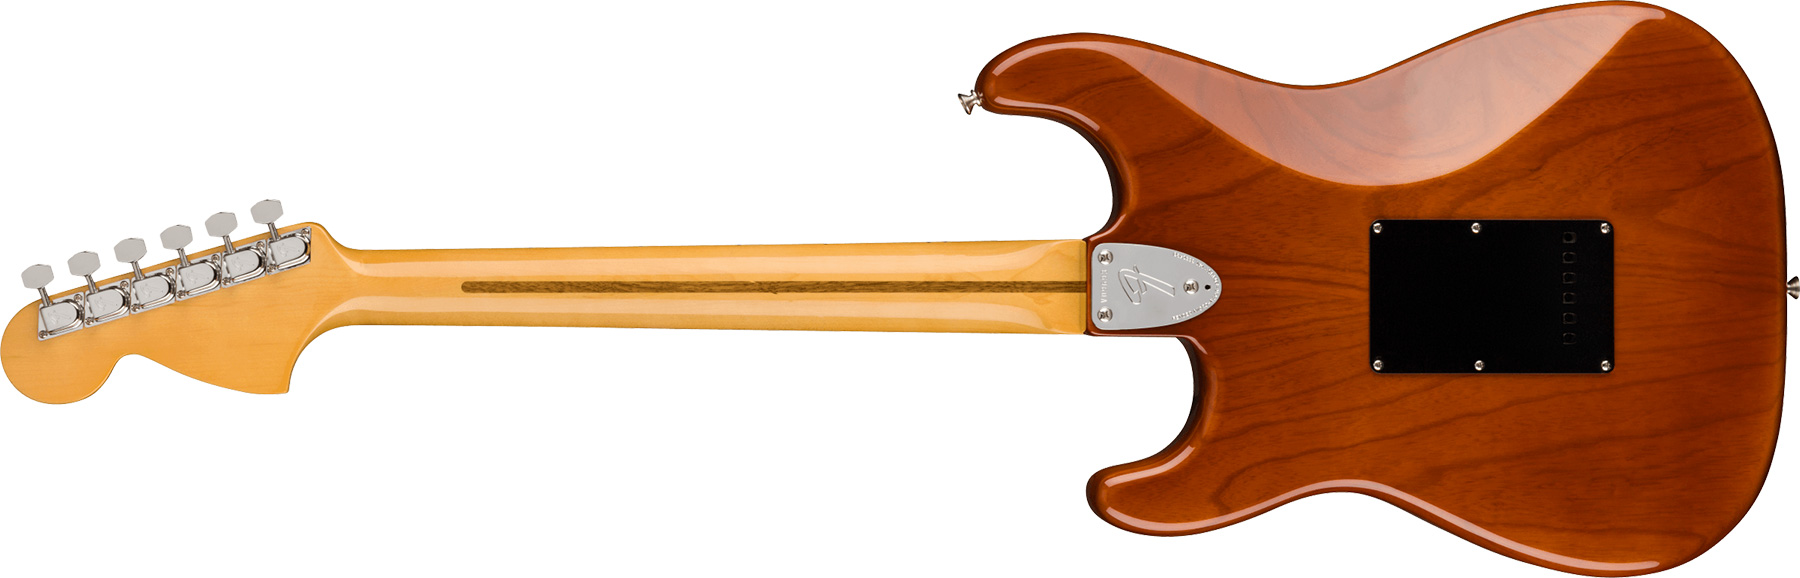 Fender Strat 1973 American Vintage Ii Usa 3s Trem Mn - Mocha - Elektrische gitaar in Str-vorm - Variation 1